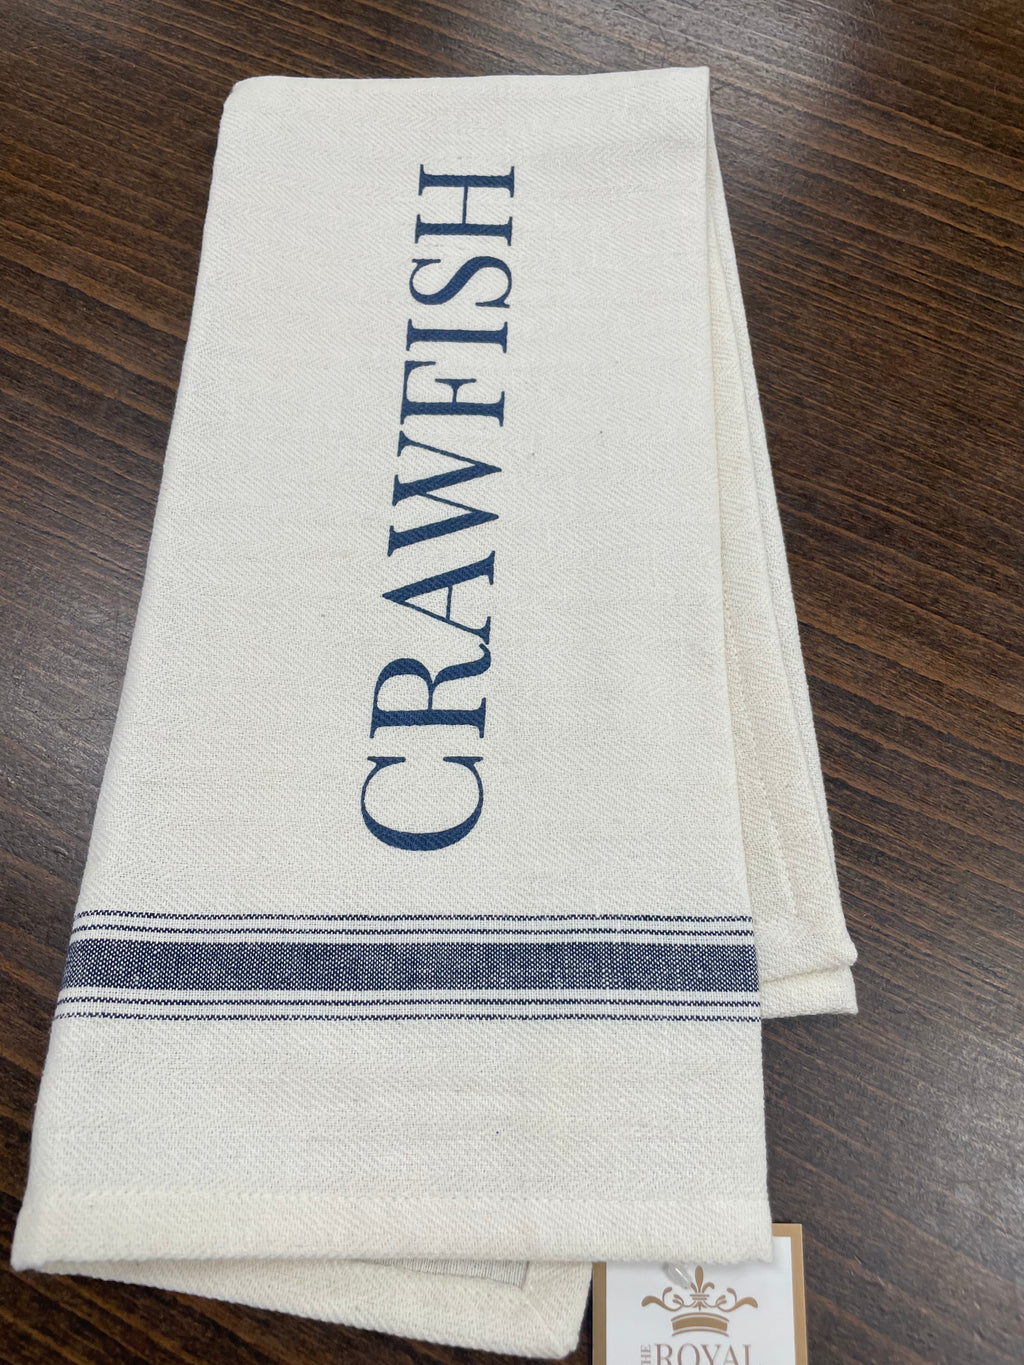 Tea Towels-Crawfish